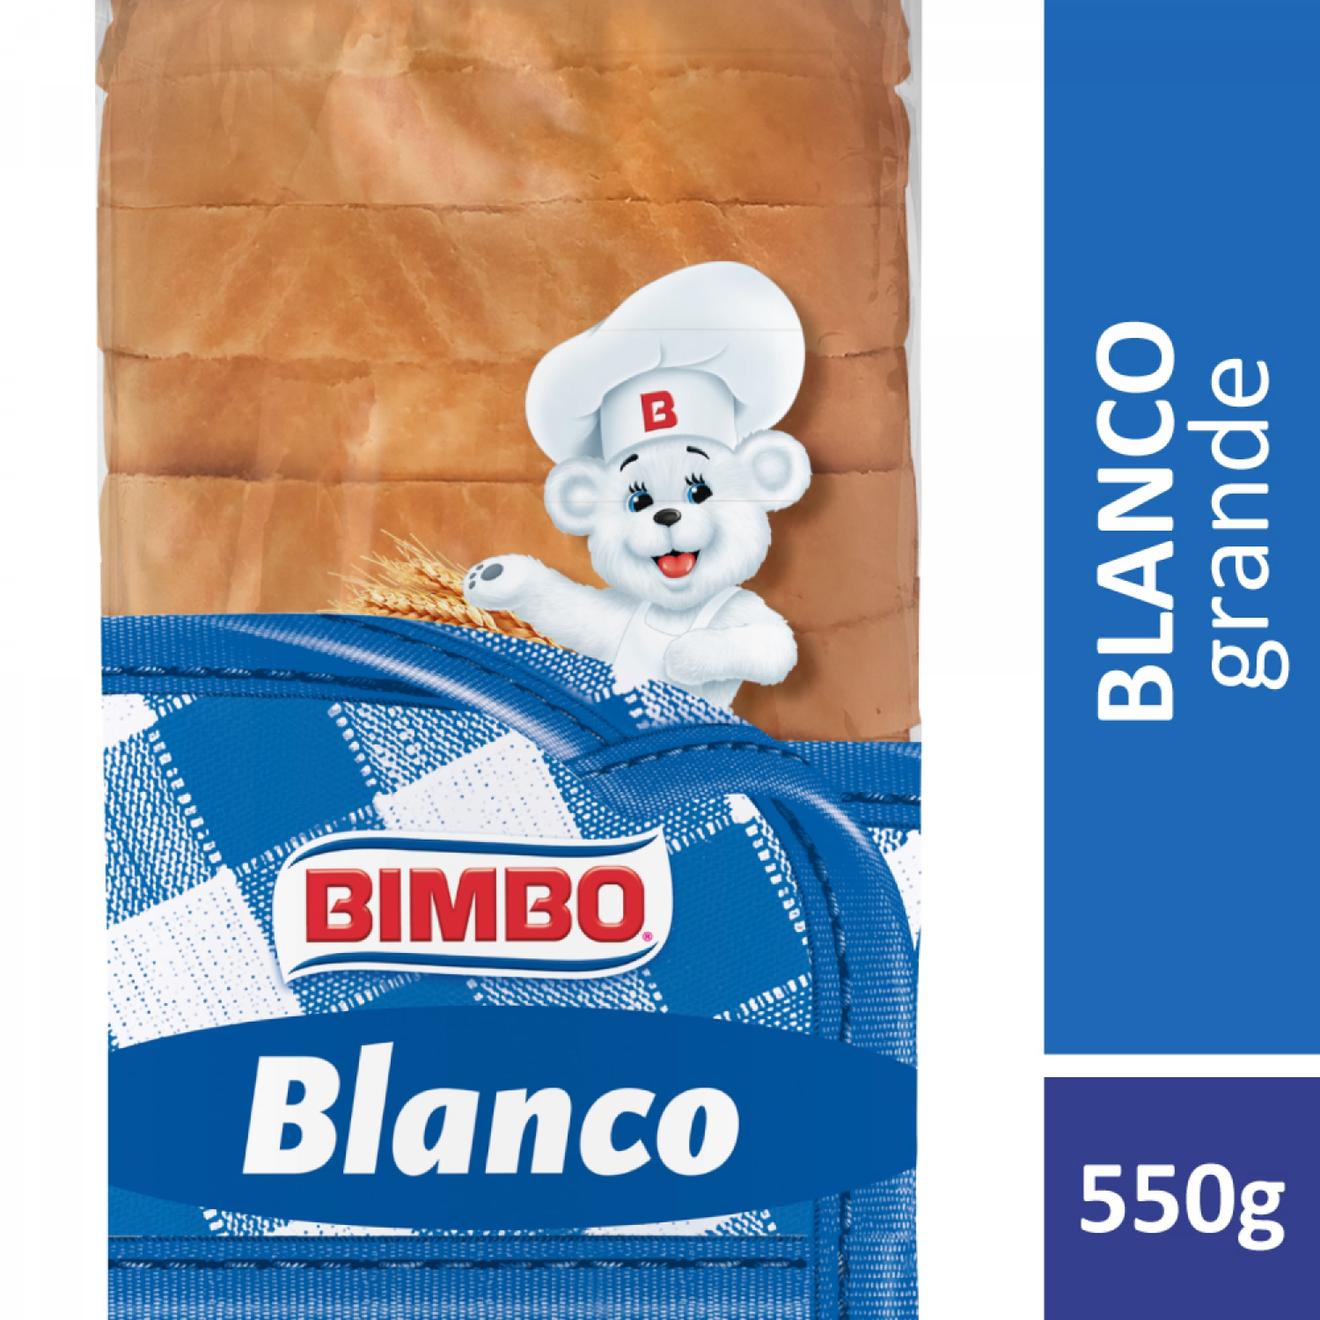 Oferta de Pan blanco Bimbo 550 g. por $3184,35 en Carrefour